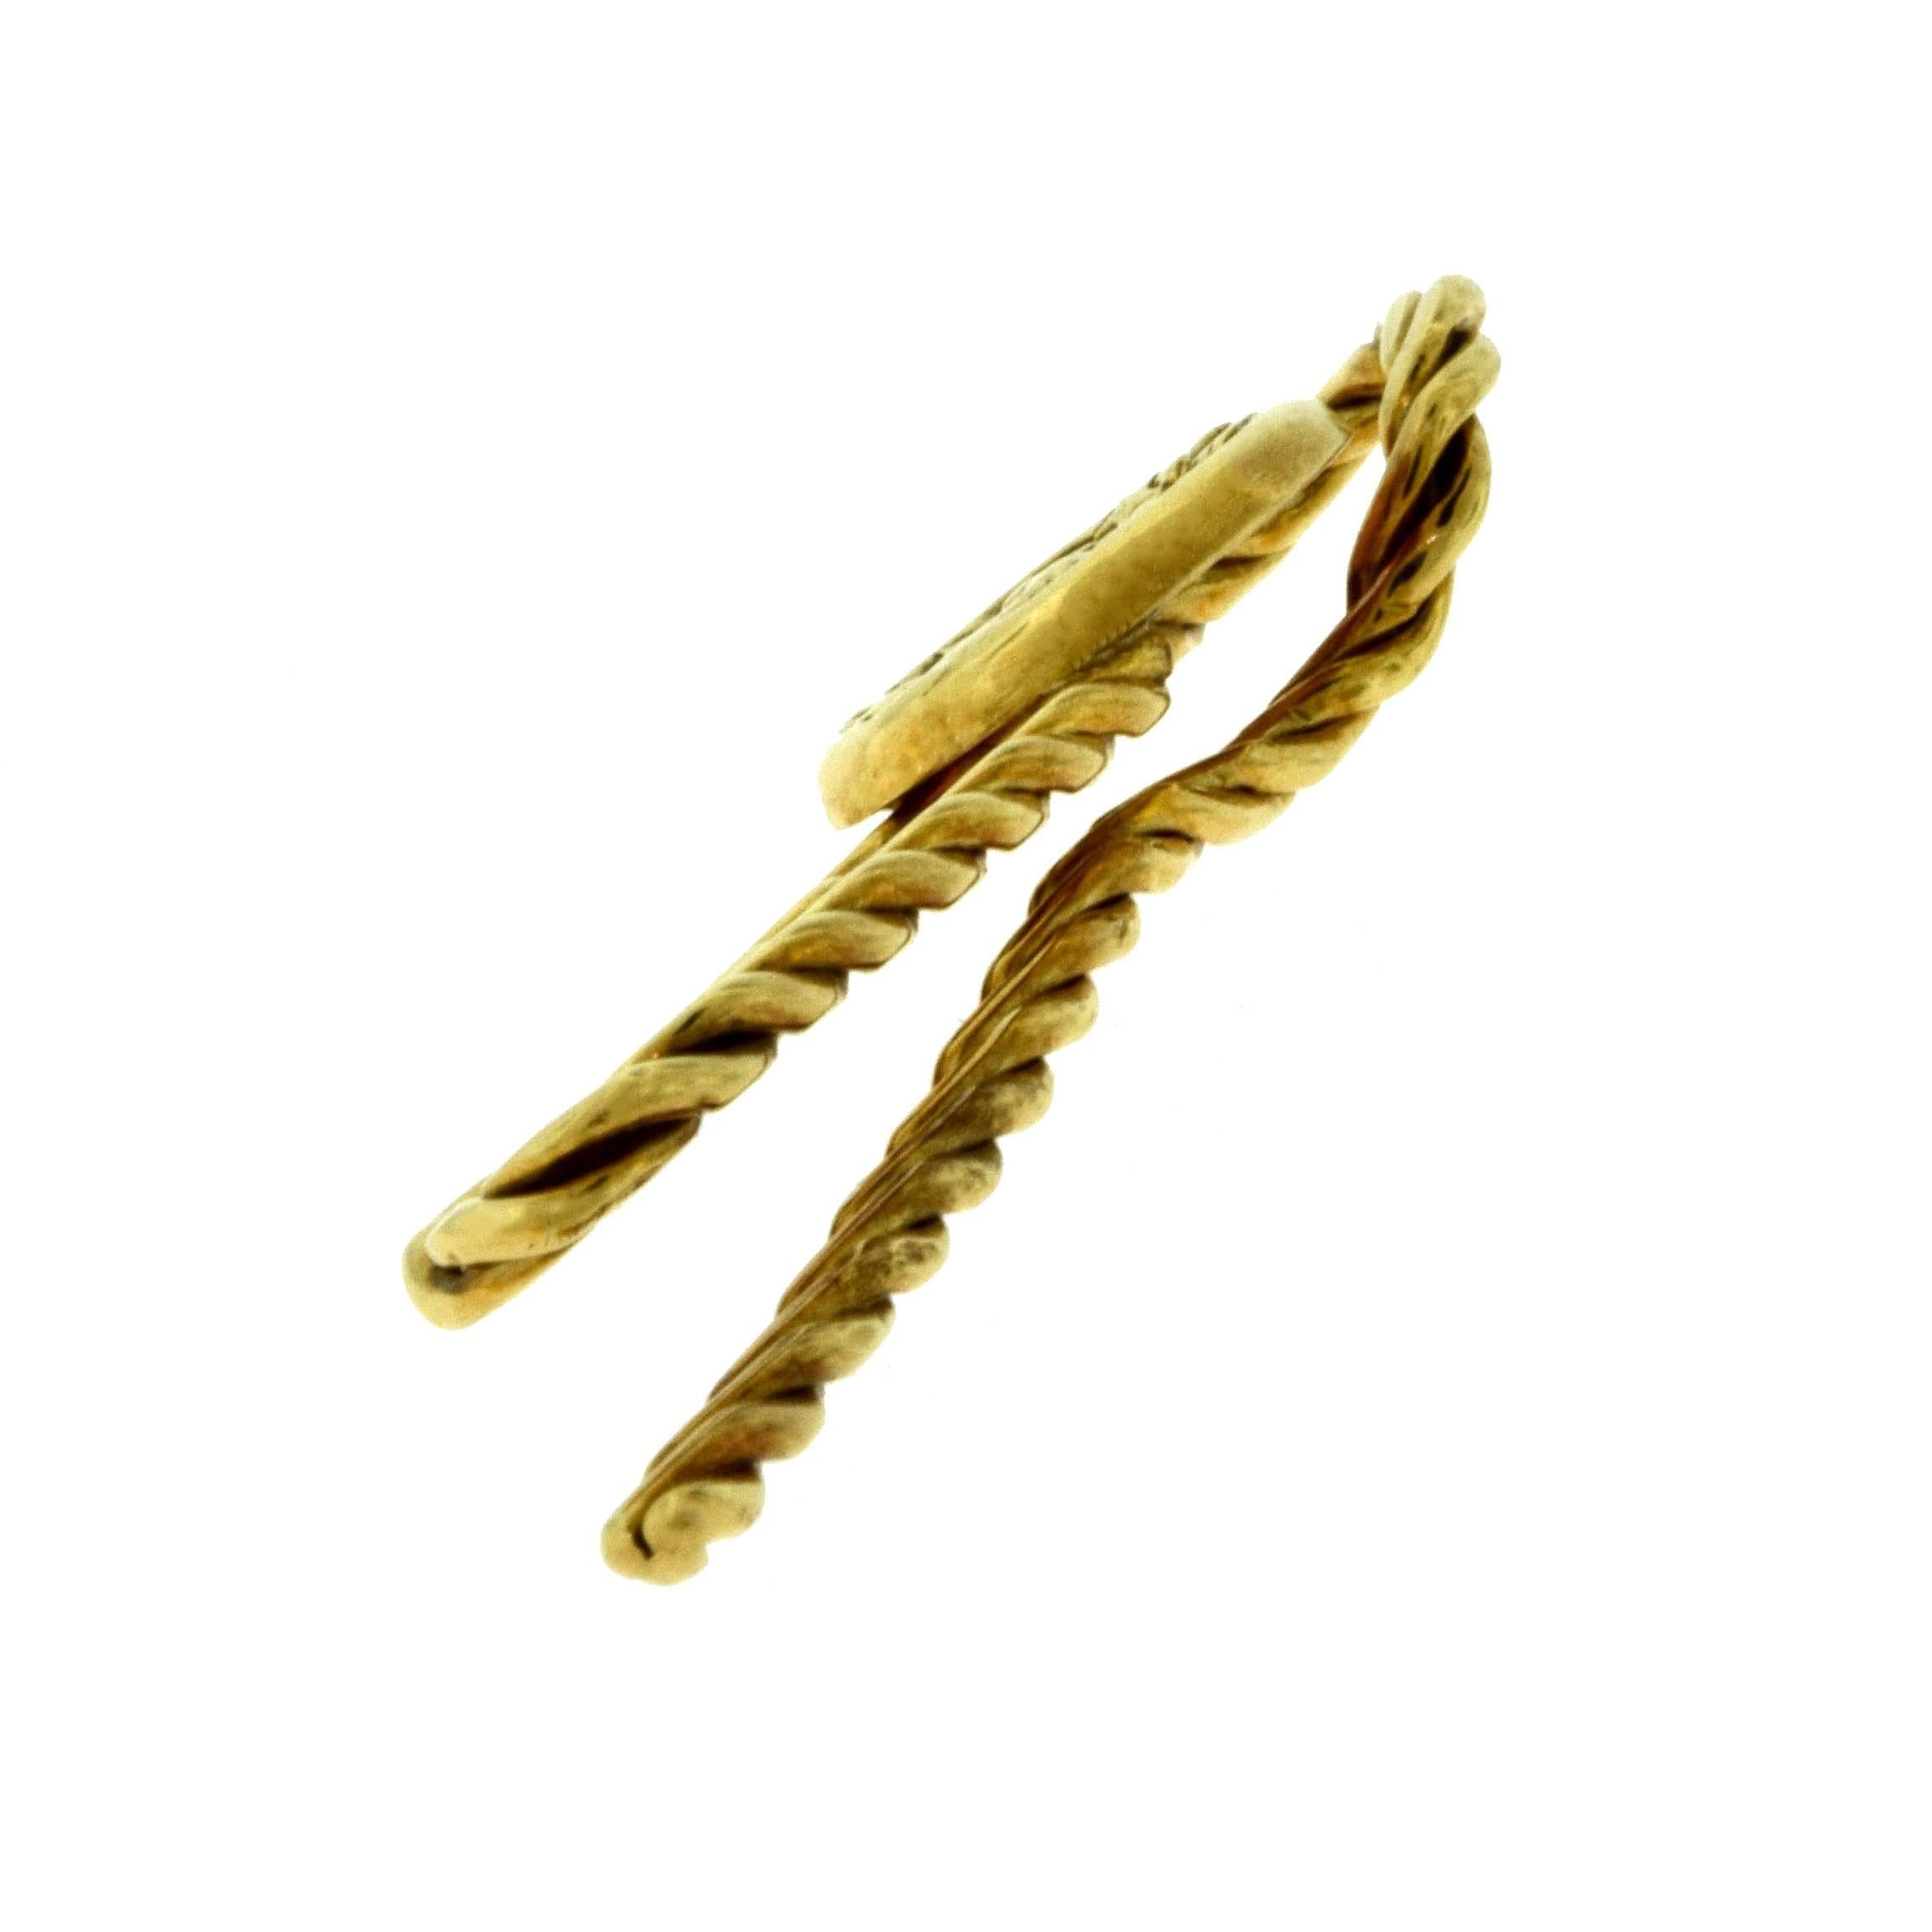 Metal: 18 Karat Yellow Gold
Weight: 10.6 grams
Length: 2.10 inches
Width: 14.25 mm
Hallmark: VCA 18K 750 Serial Number